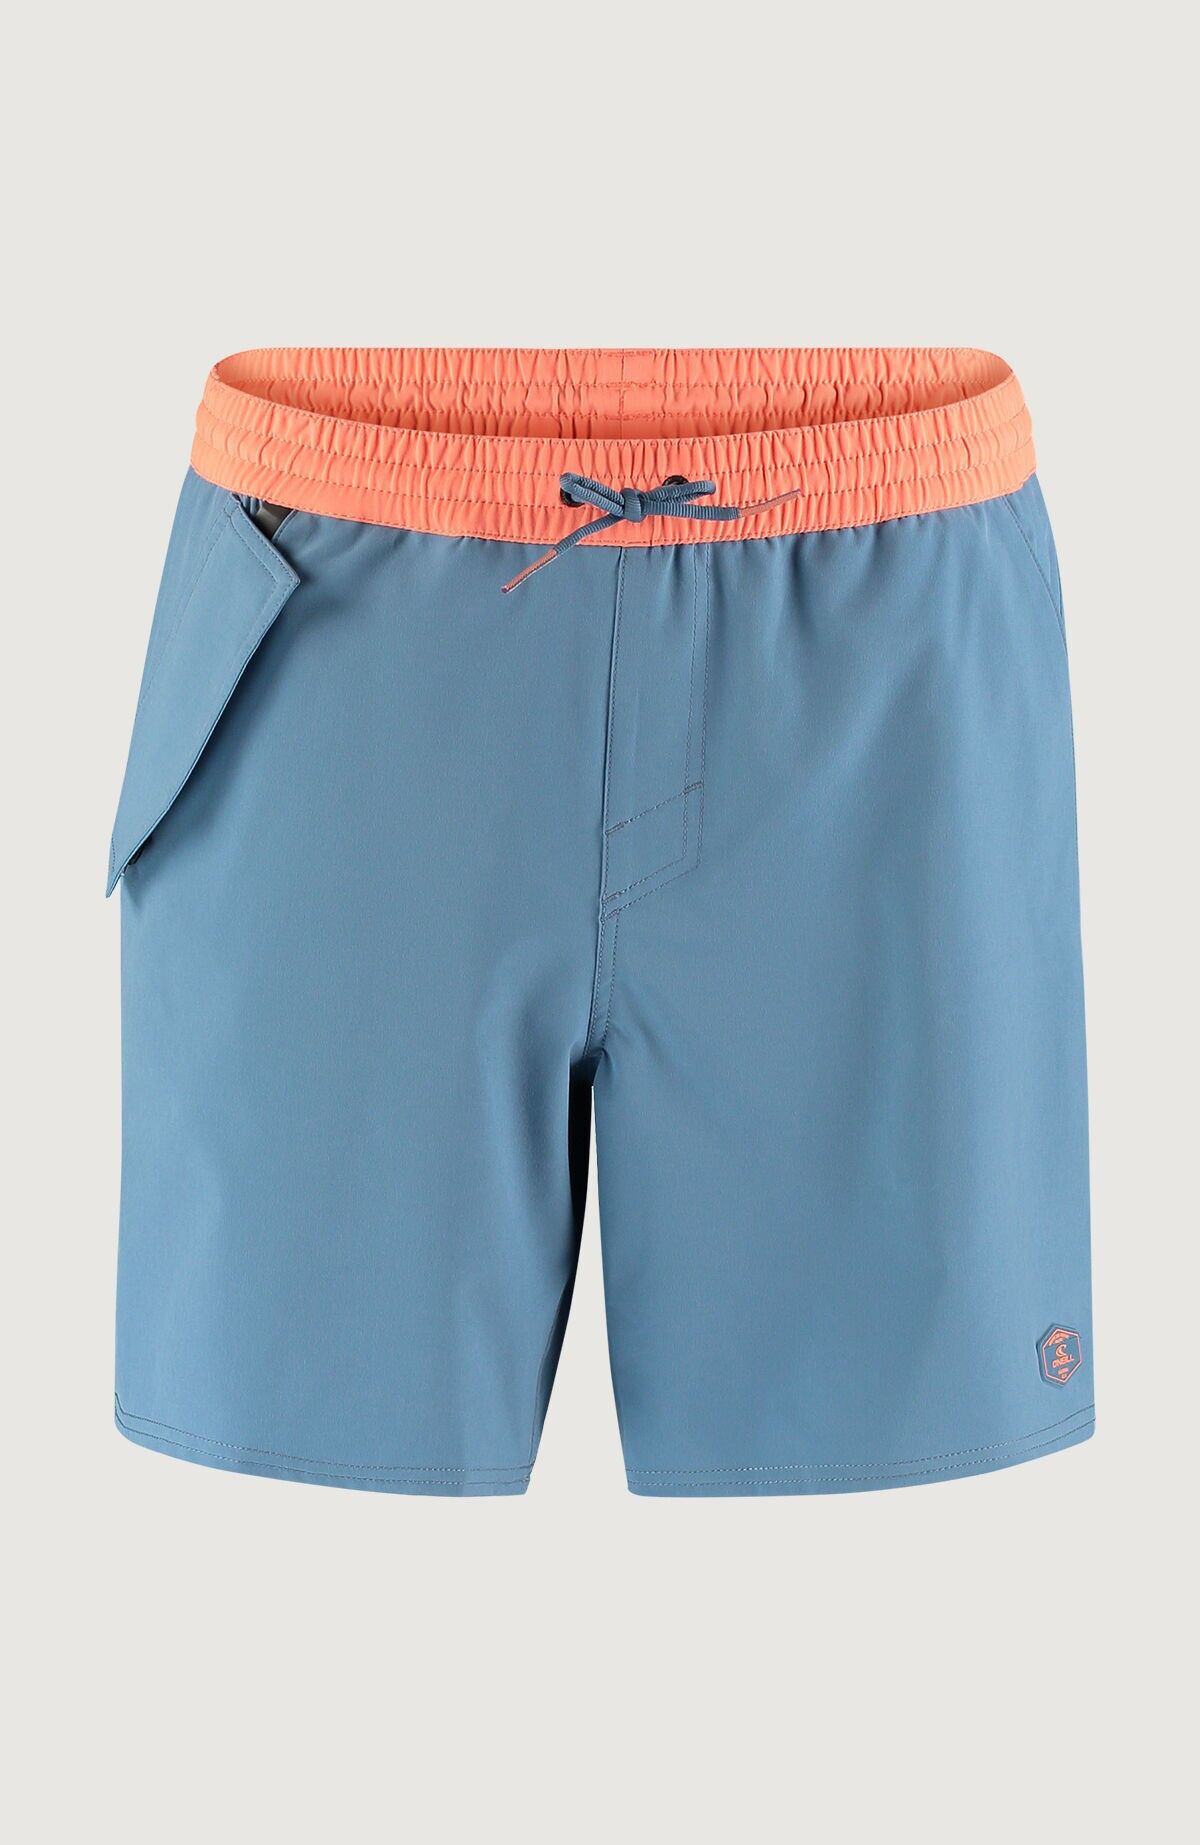 O'Neill Wp-Pocket Shorts - Boardshort Herr